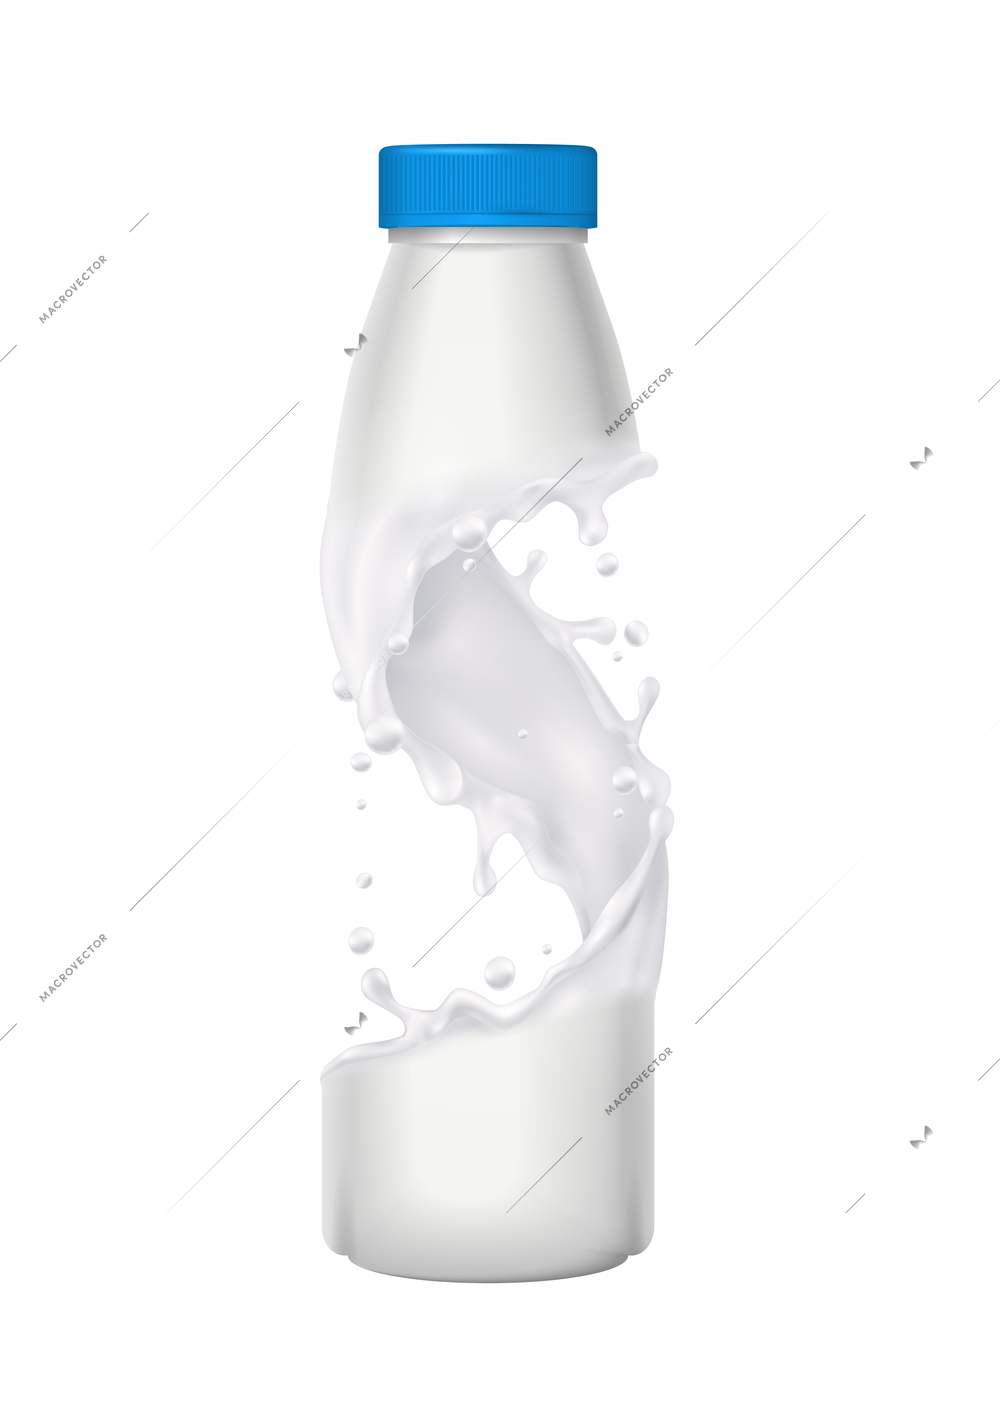 Realistic bottle of milk splashes isolated vector illustration